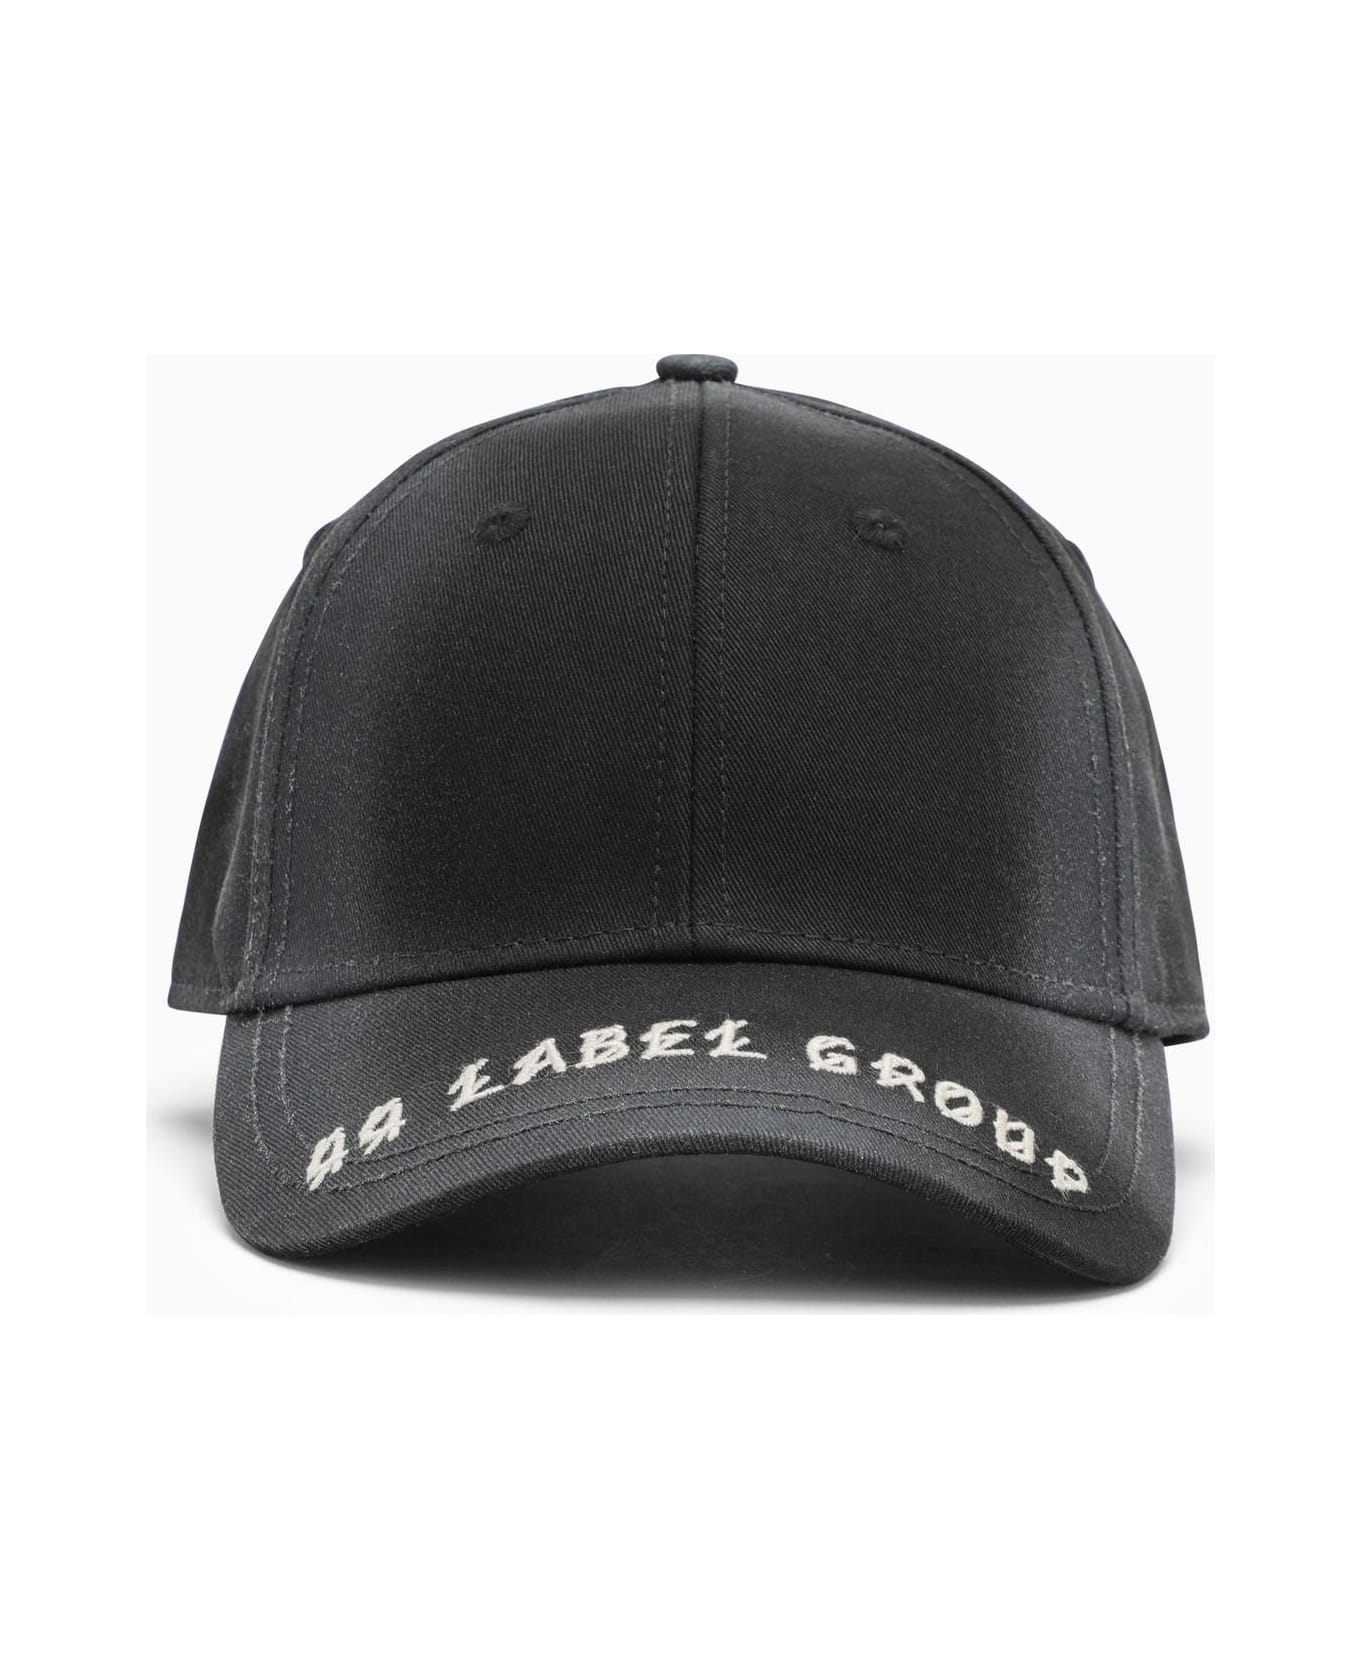 44 Label Group Black Visor Hat With Logo Embroidery - Black